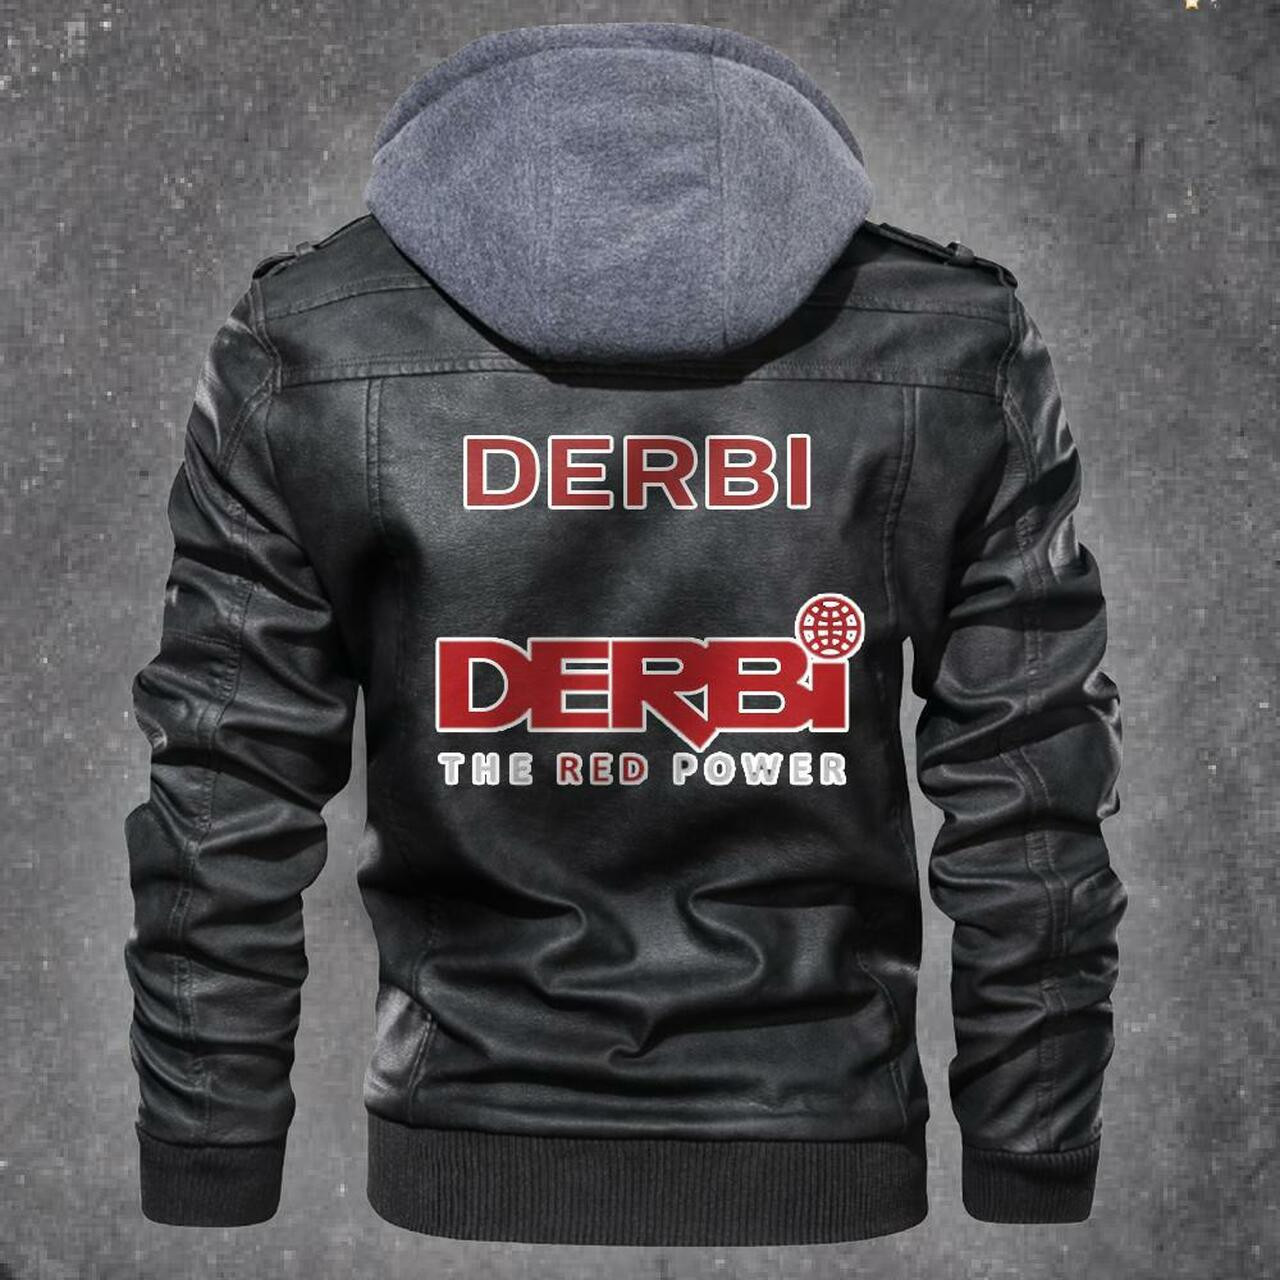 Top leather jacket Sells Best on Techcomshop 167